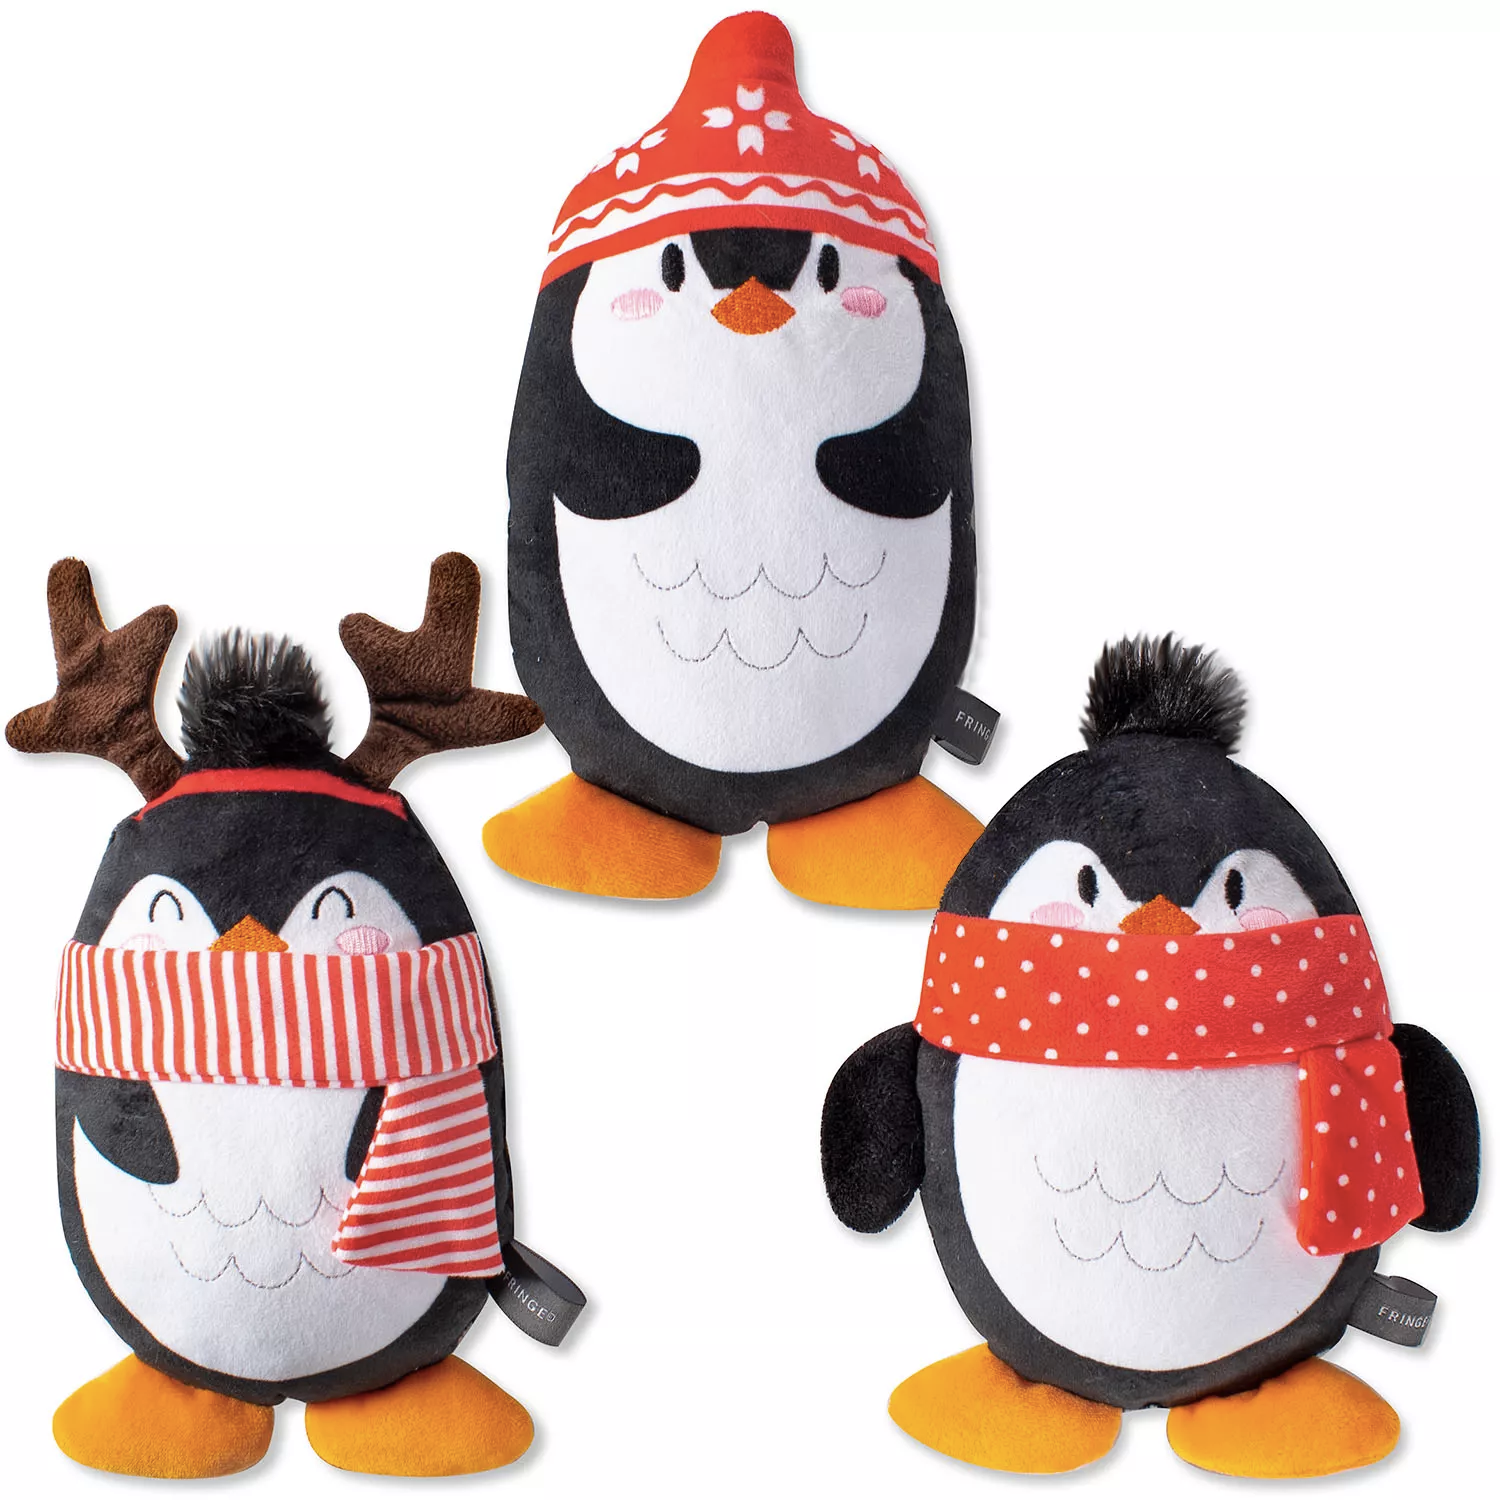 Three round penguins wearing various winter clothing 